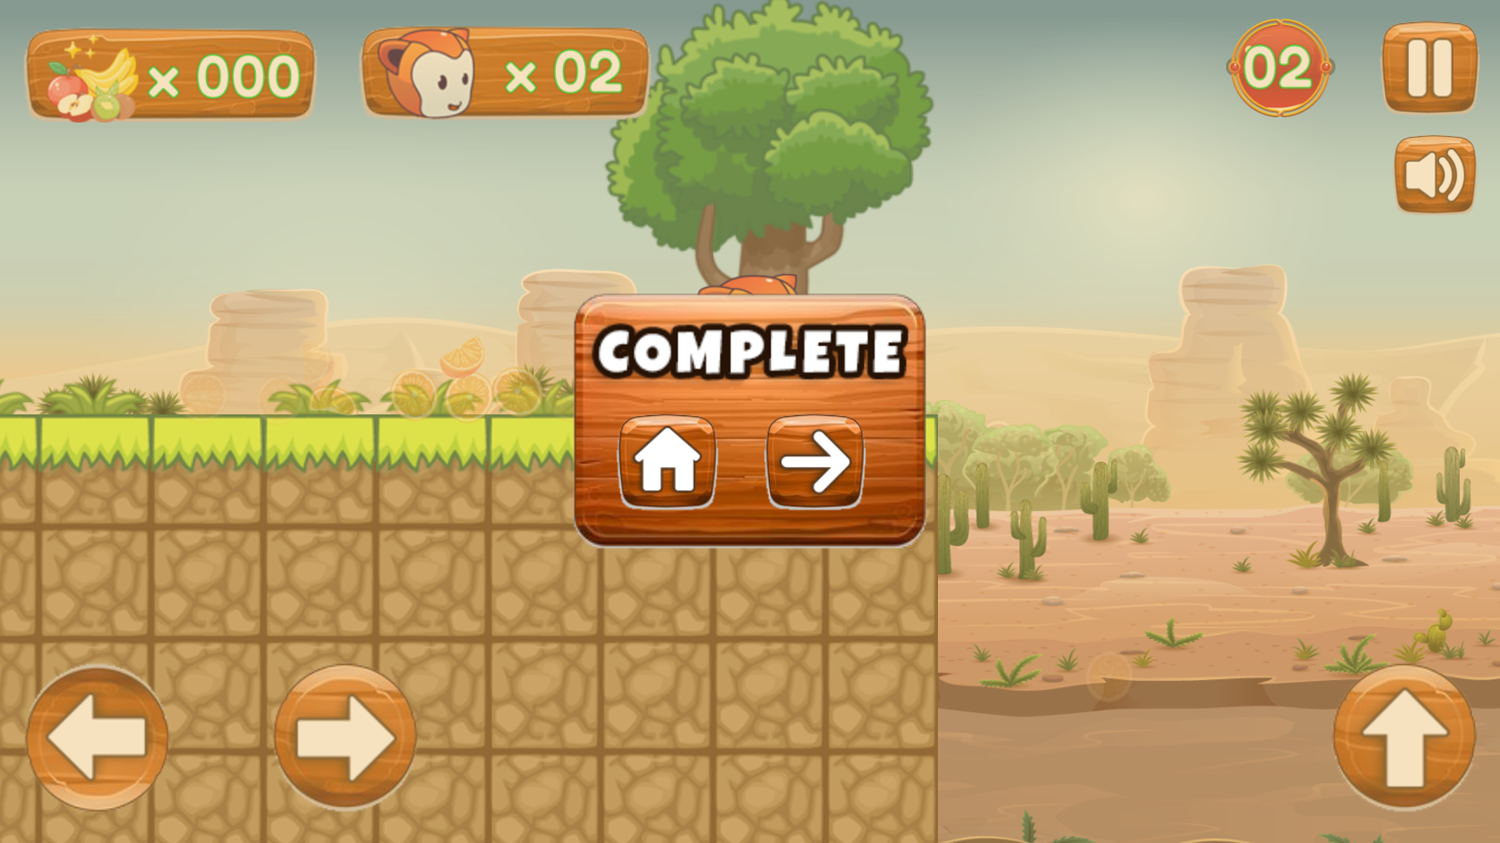 Adventure Squirrel Game Level Complete Screenshot.